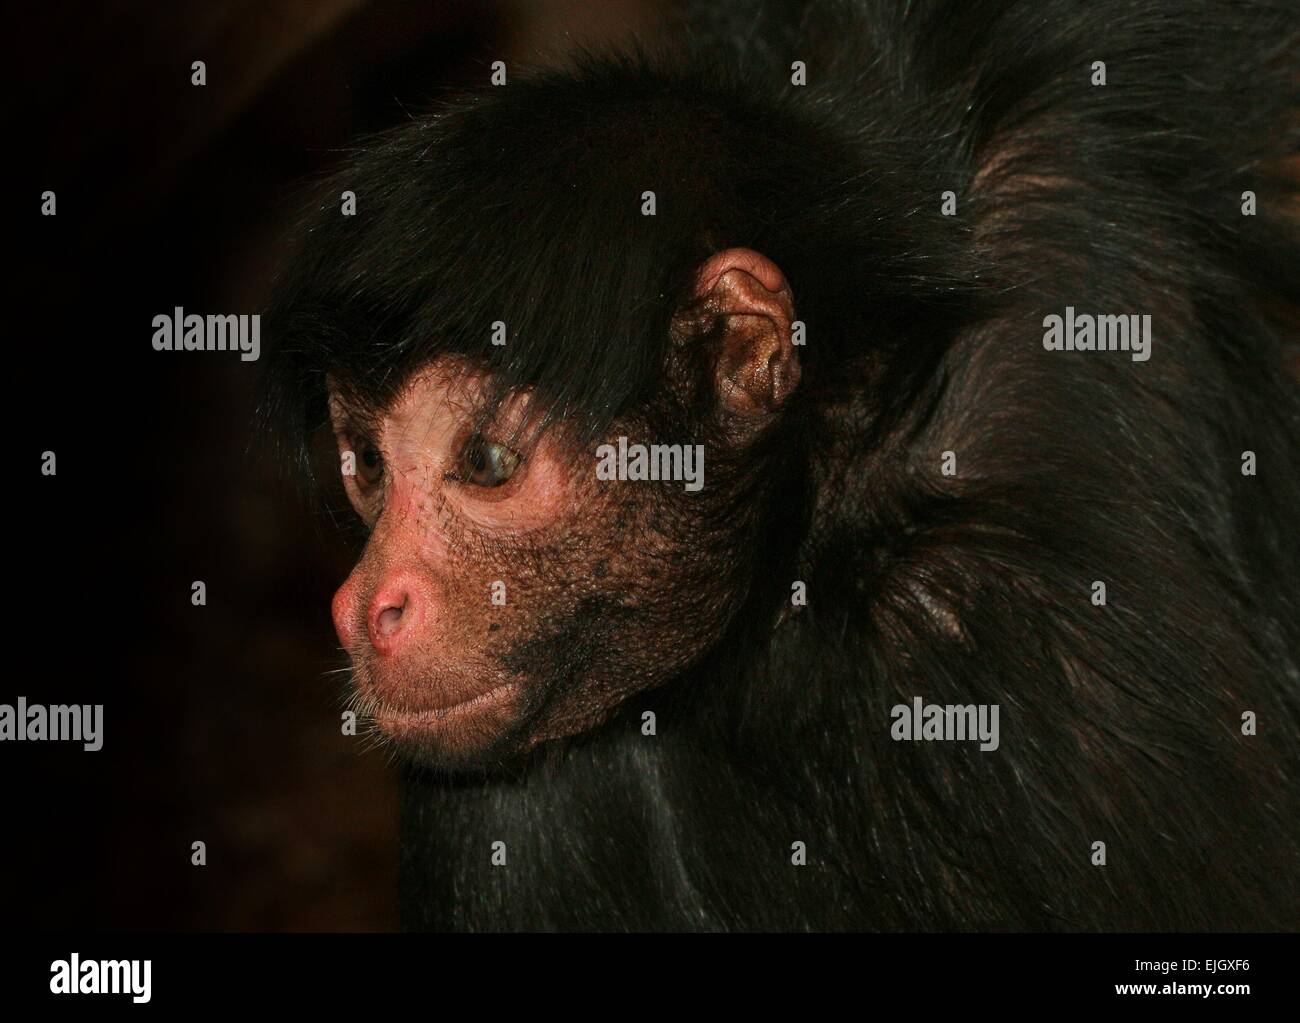 Macaco Aranha Preto - Ateles paniscus - Redfaced Spider Monkey